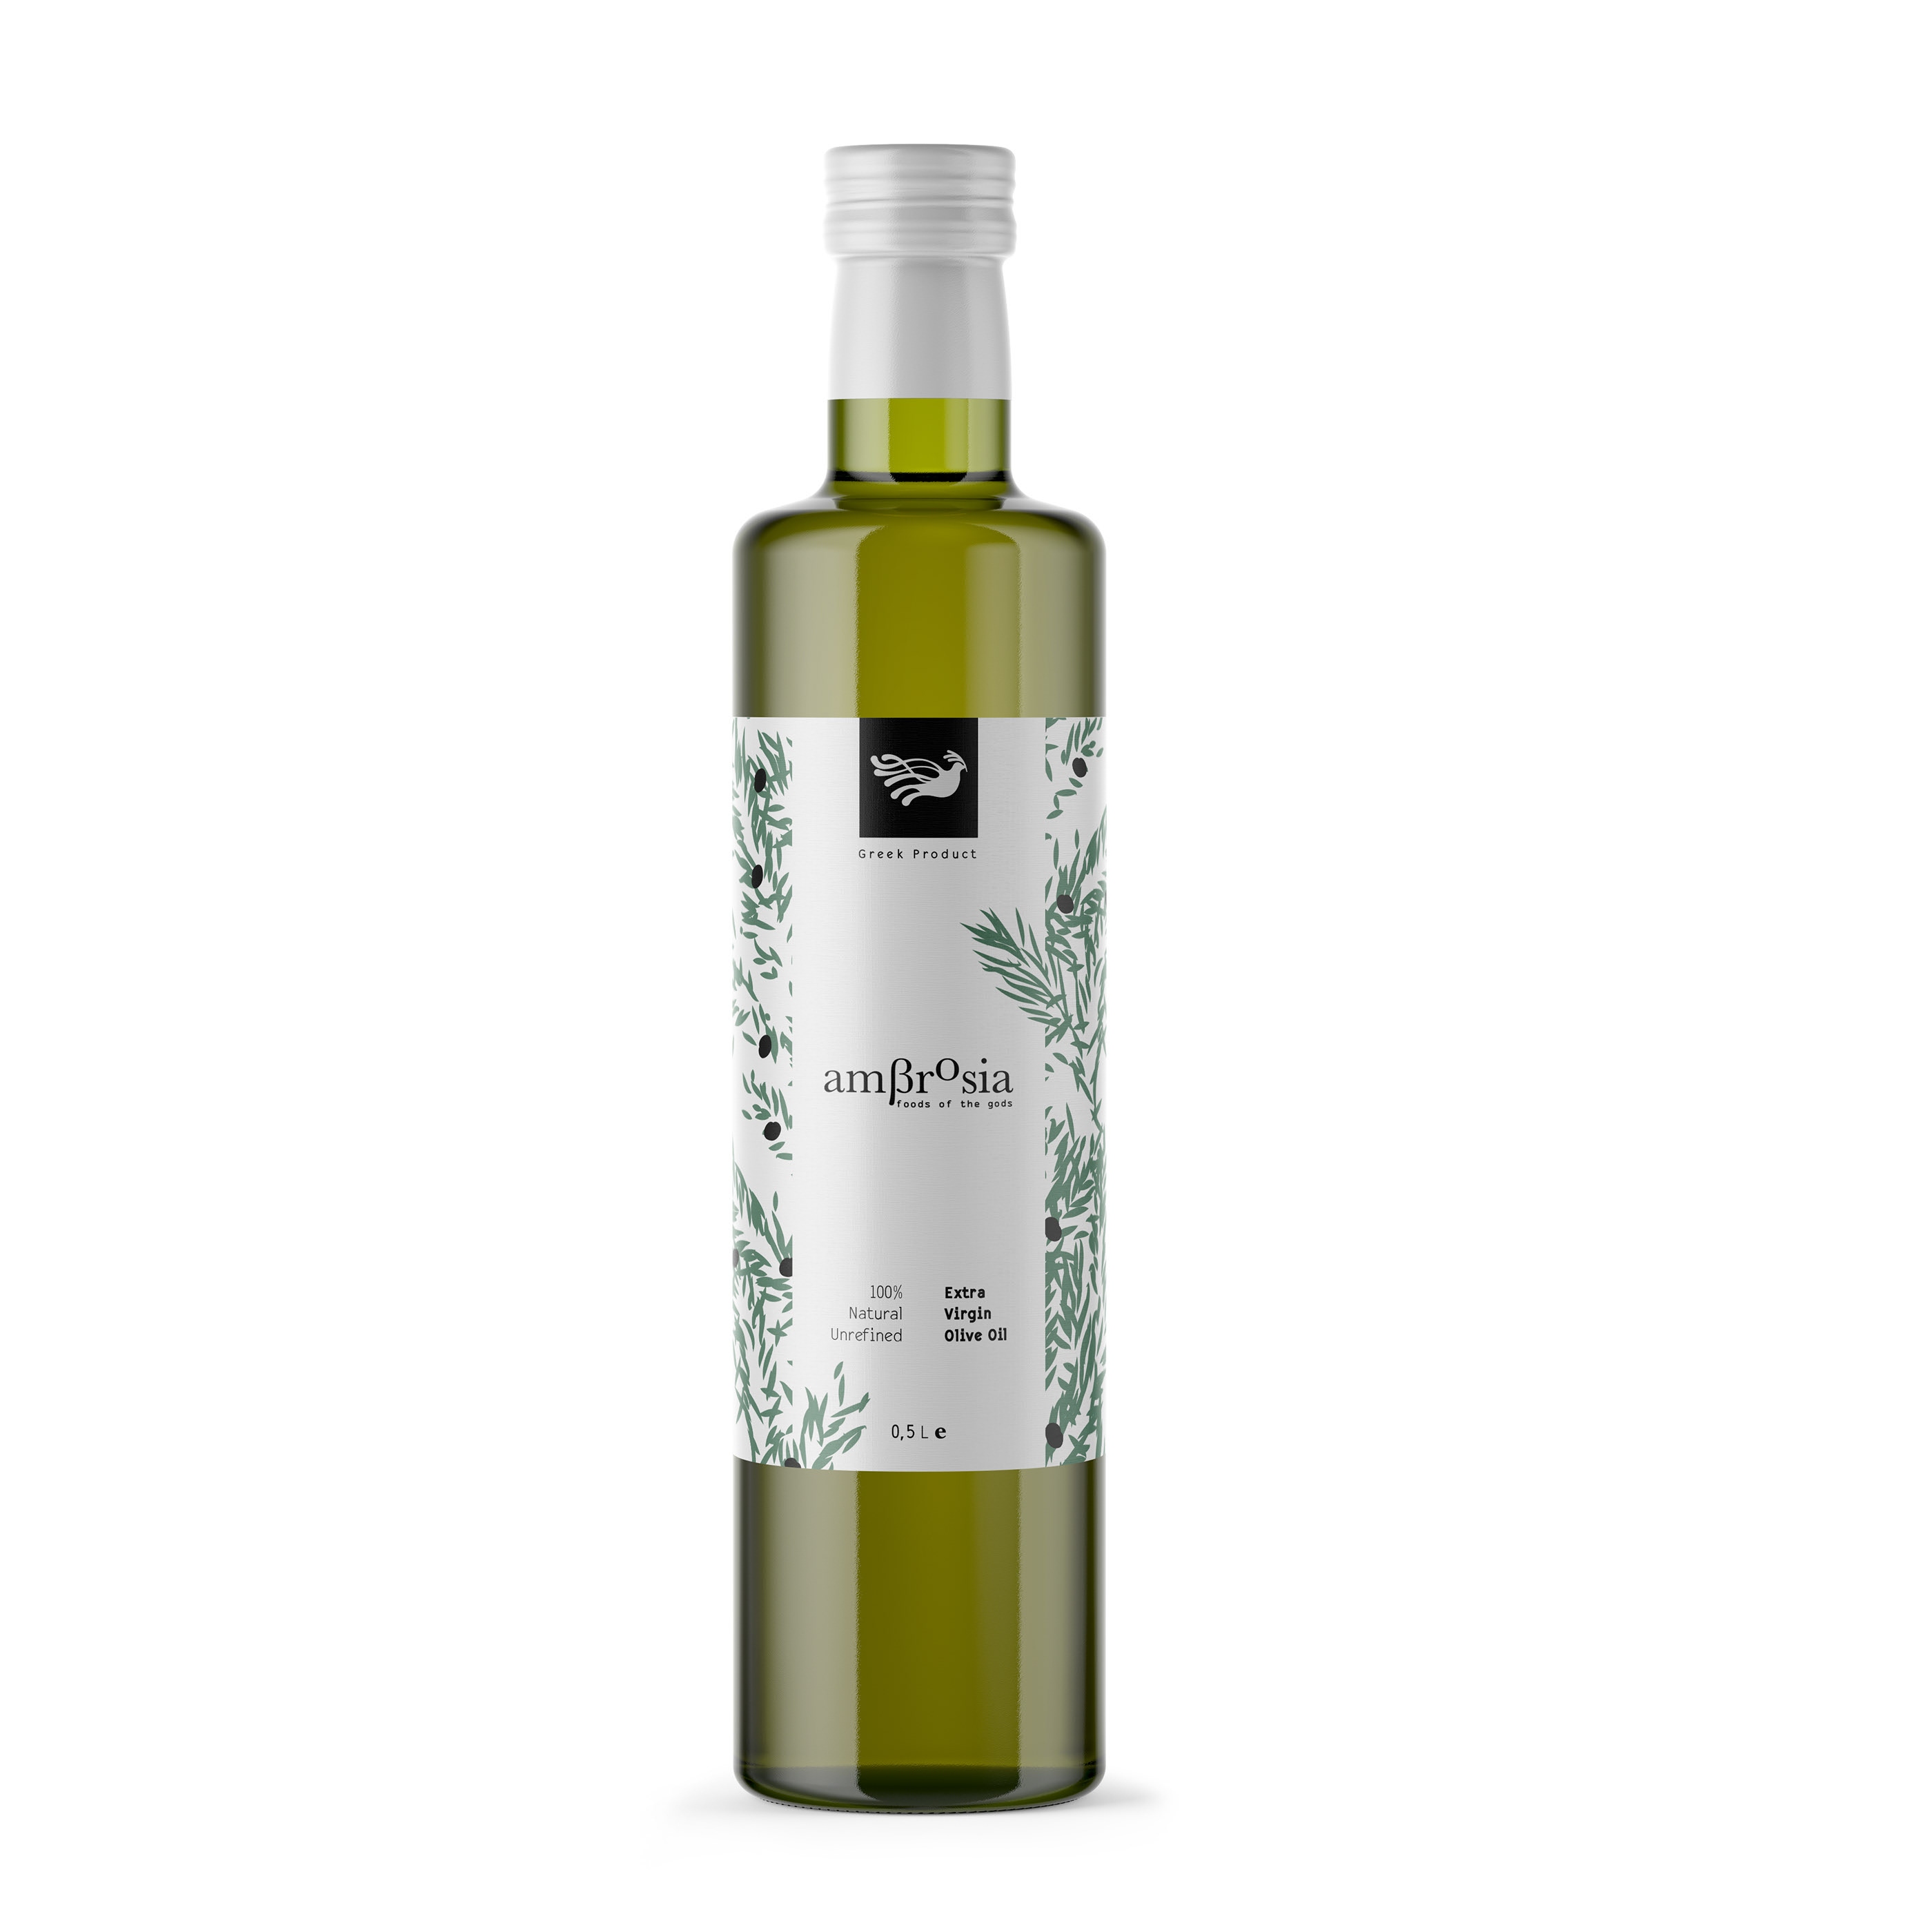 Оливковое масло колумб. Natura Extra Virgin Olive Oil. Дозатор для оливкового масла. Оливковое масло Premium. Греческое оливковое масло.